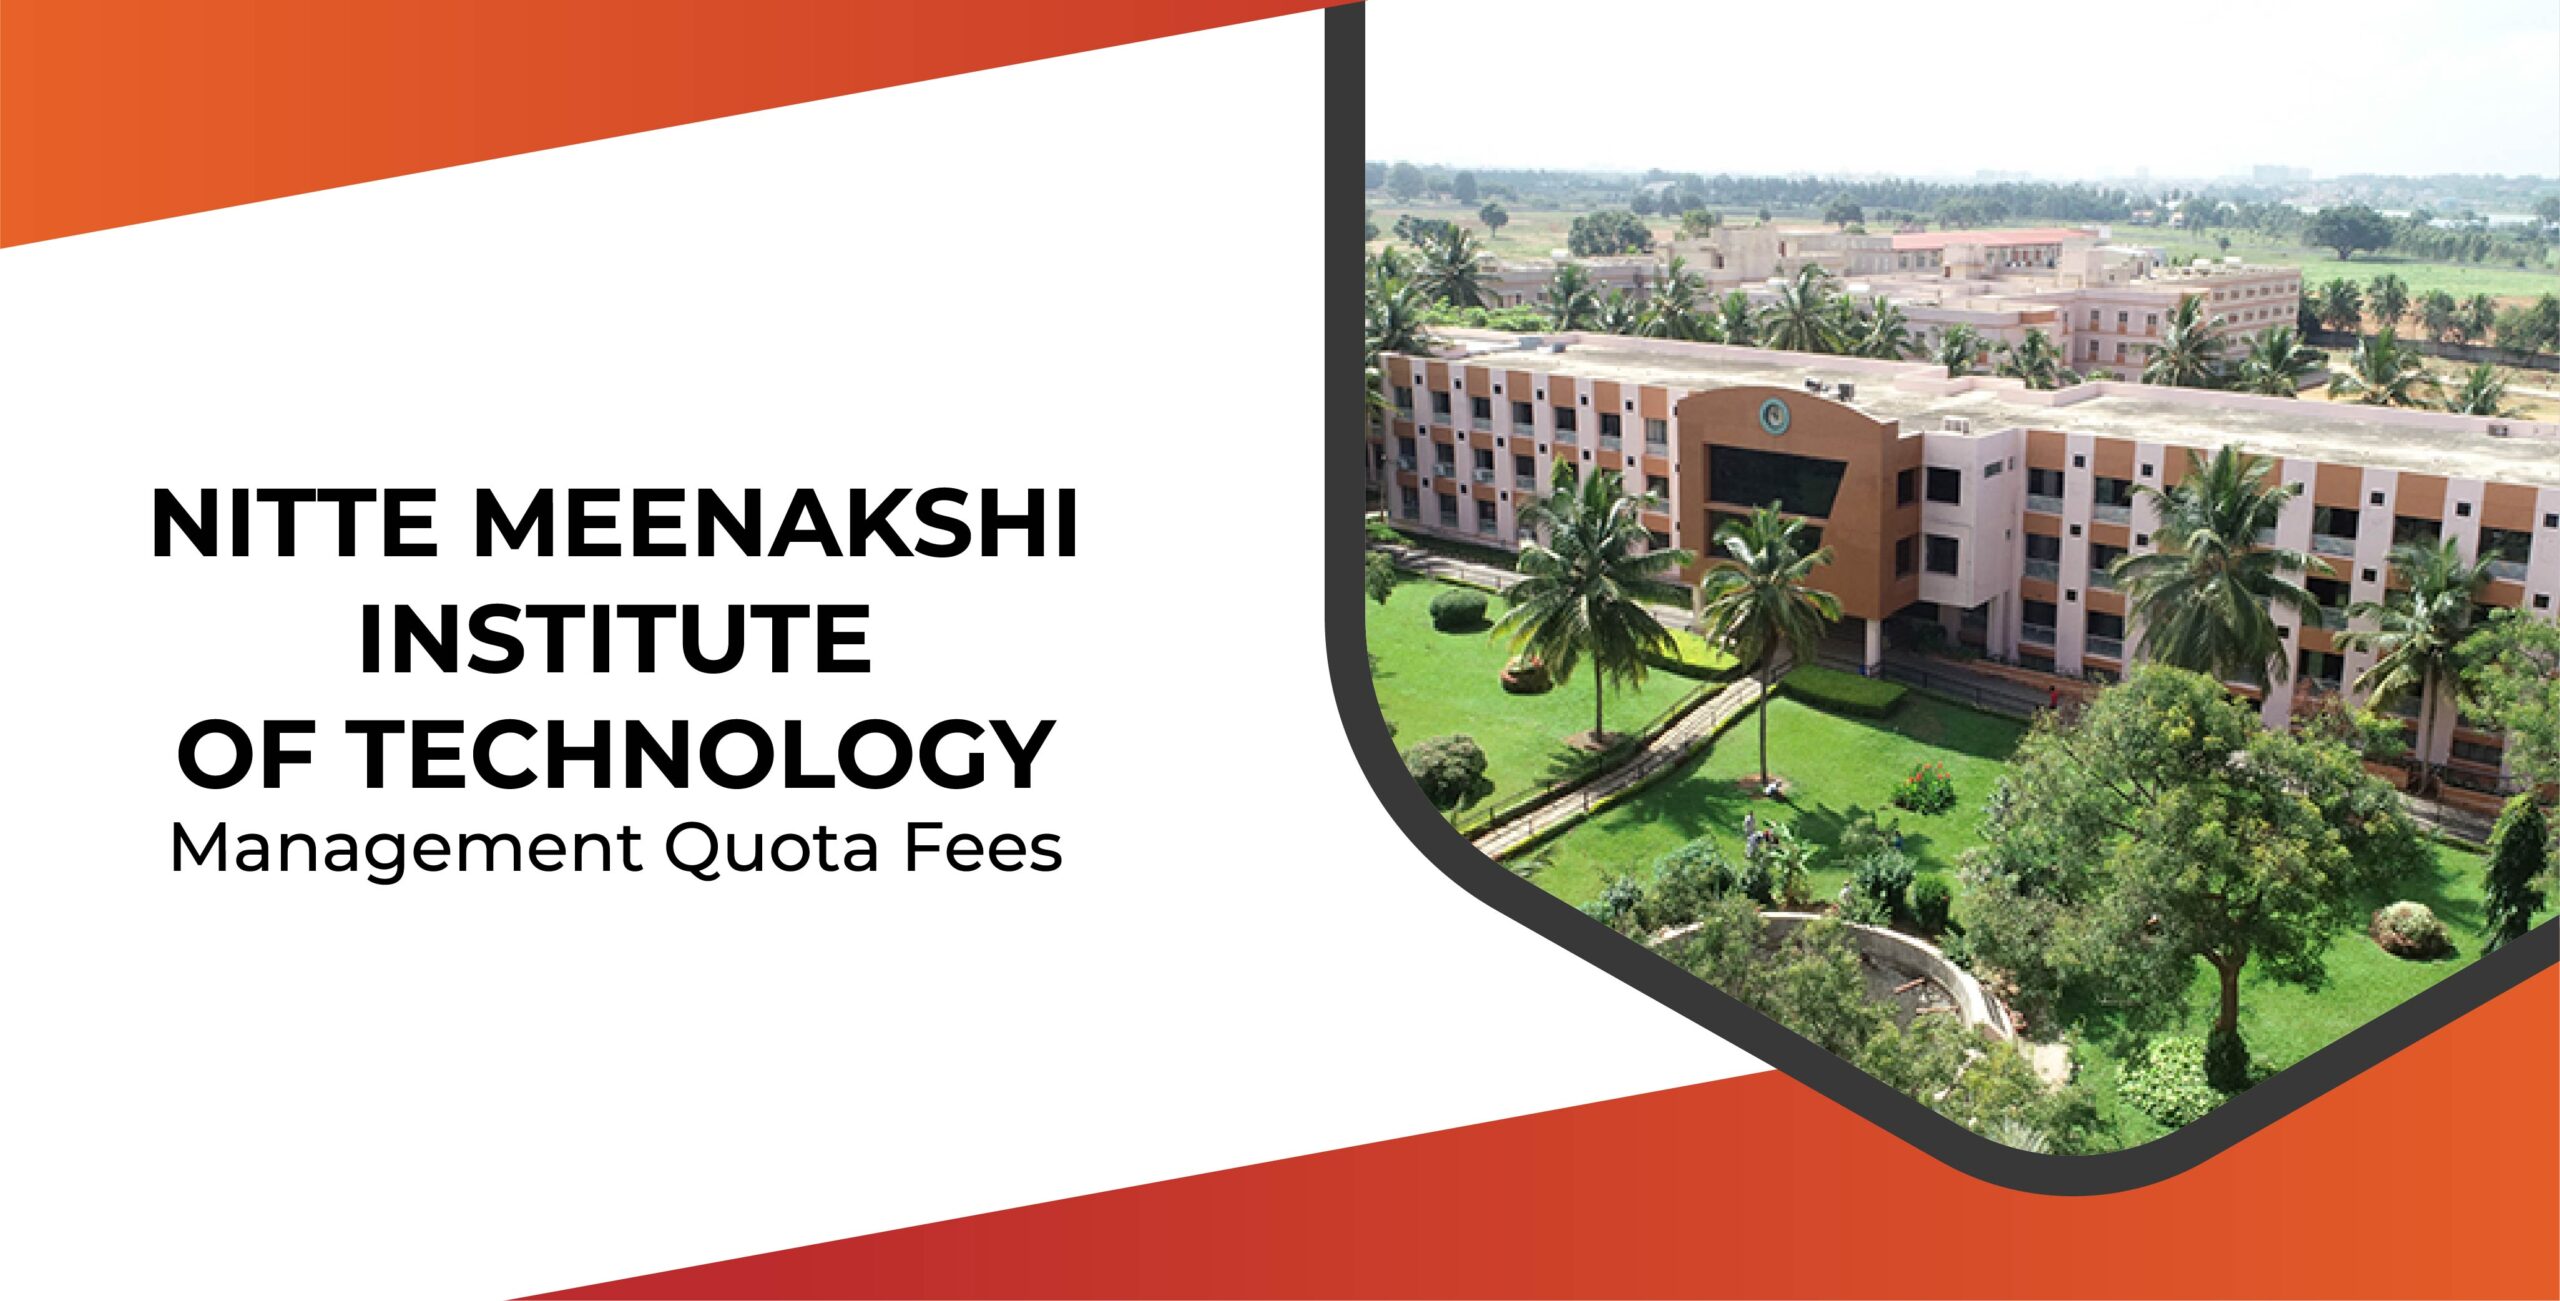 Nitte Meenakshi Institute of Technology Management Quota Fees